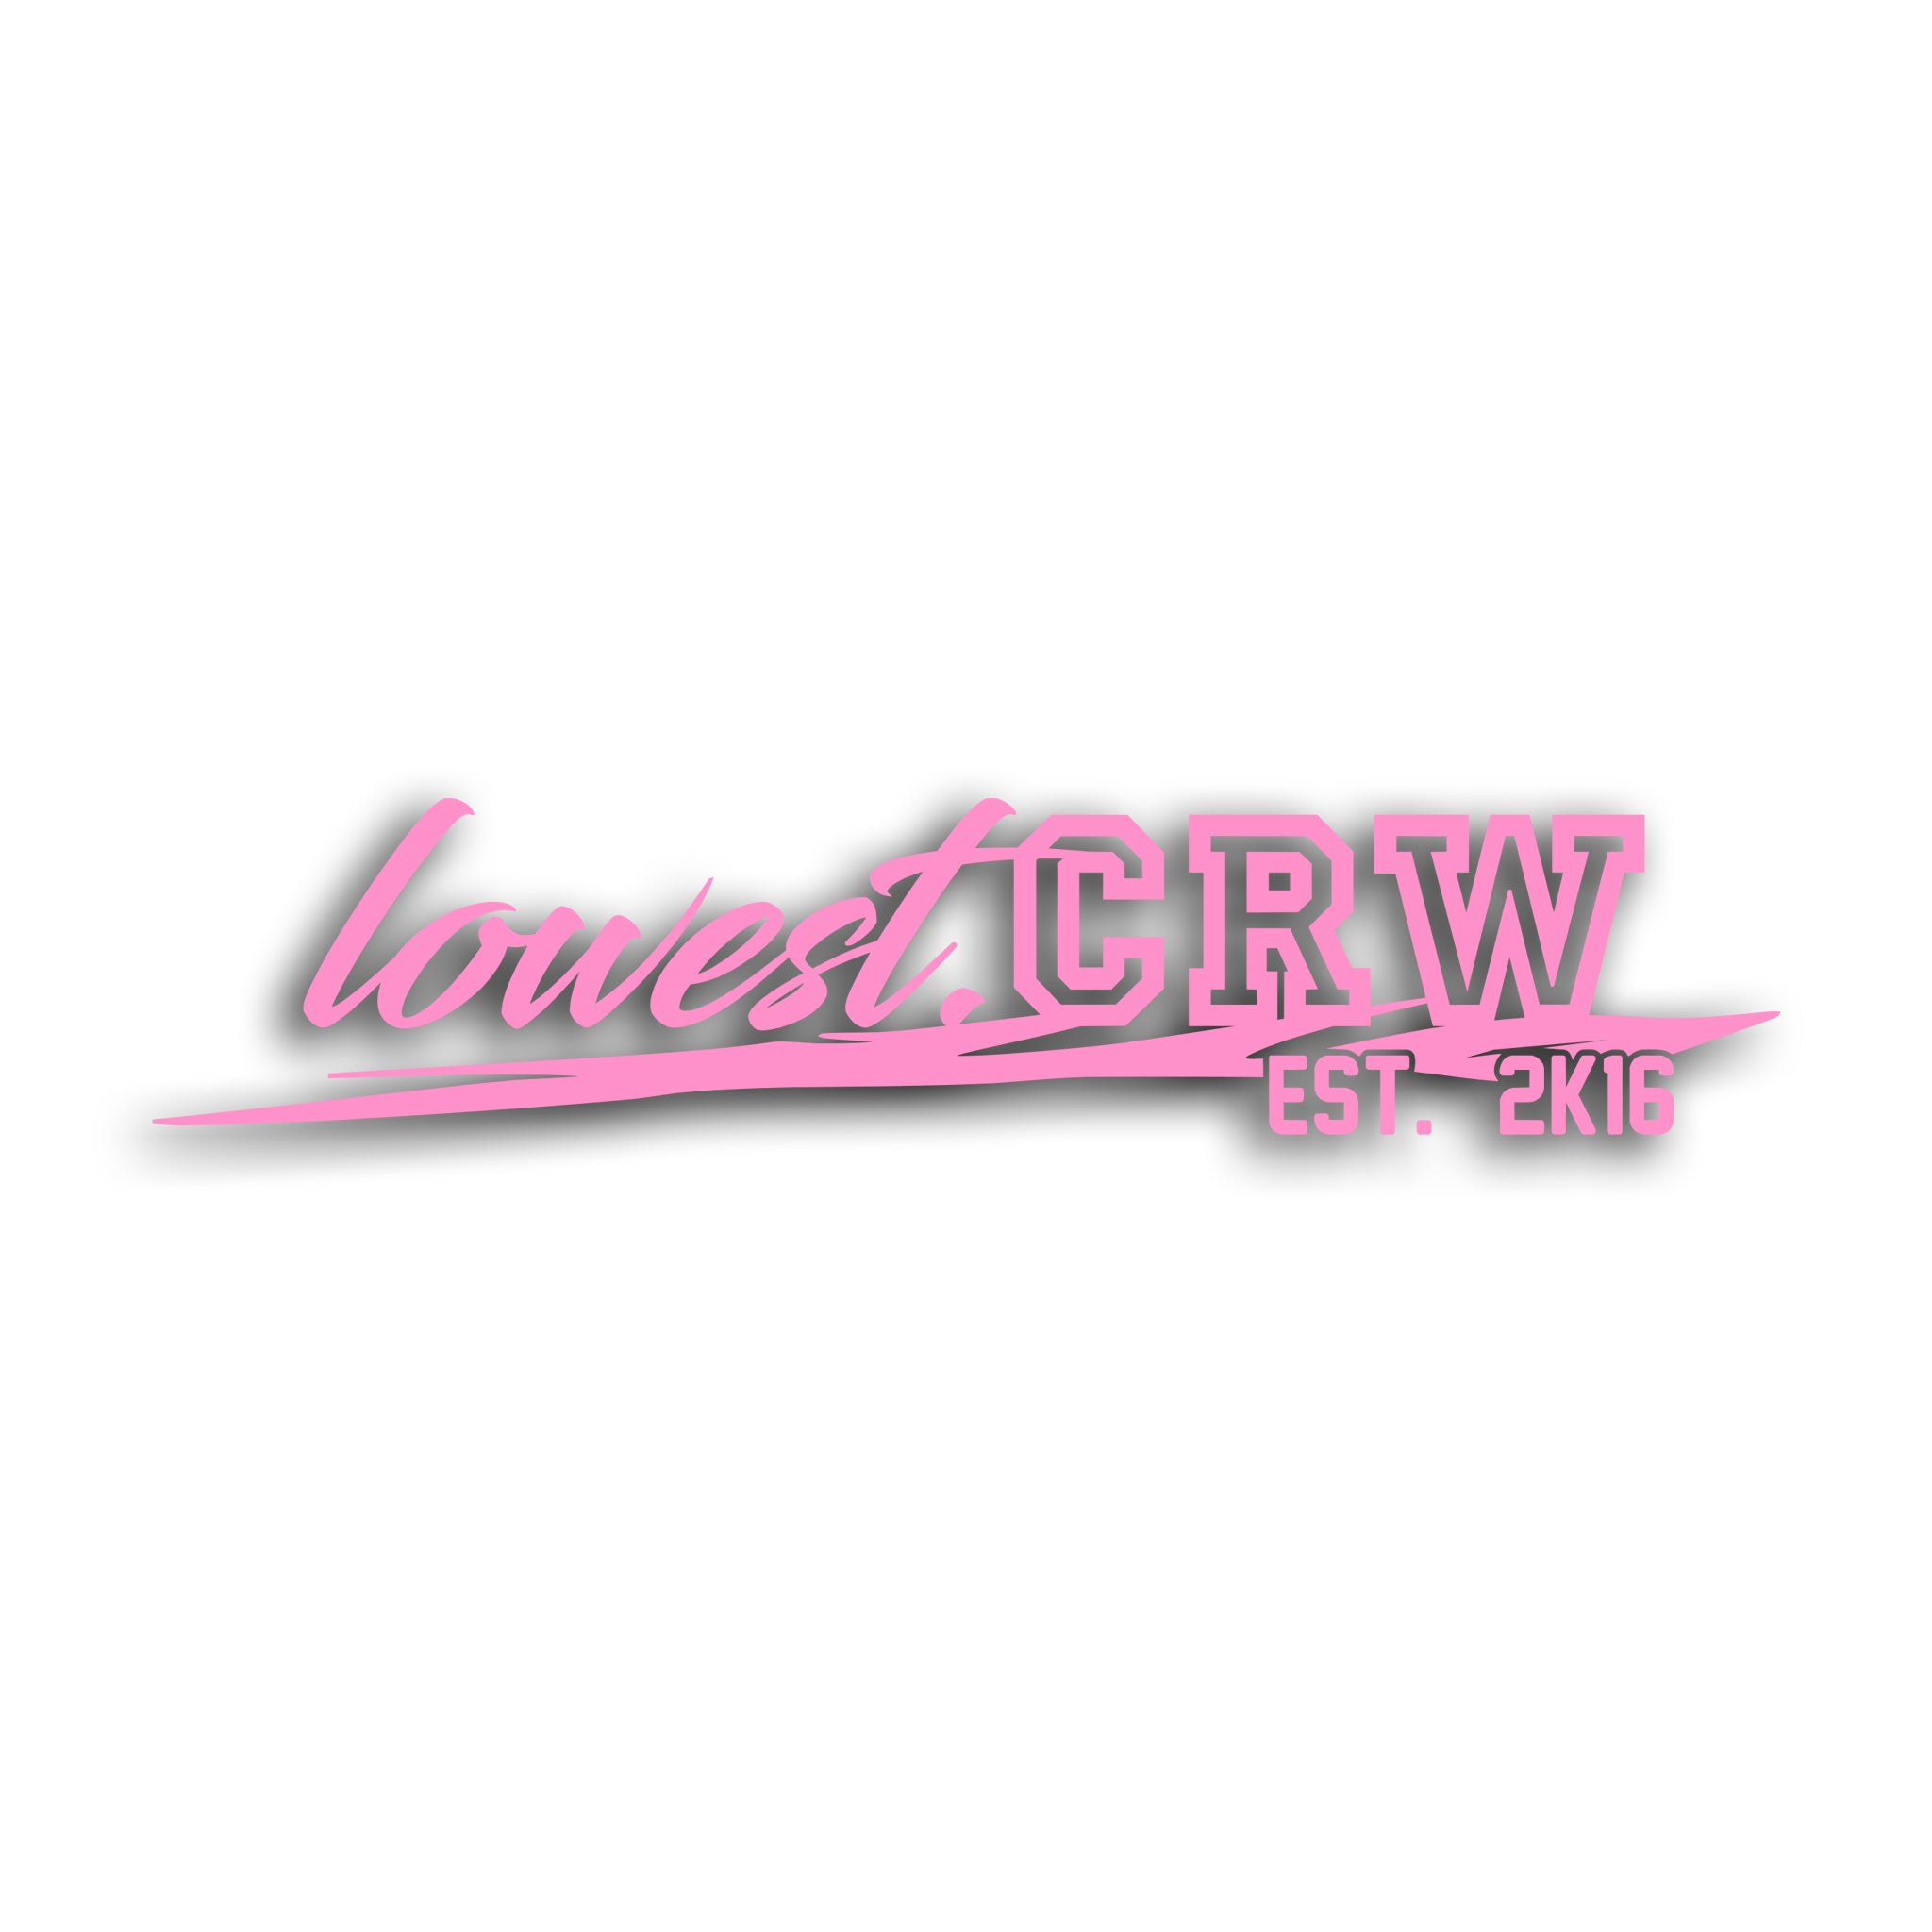 LWSTCRW™ Sticker "CREW"